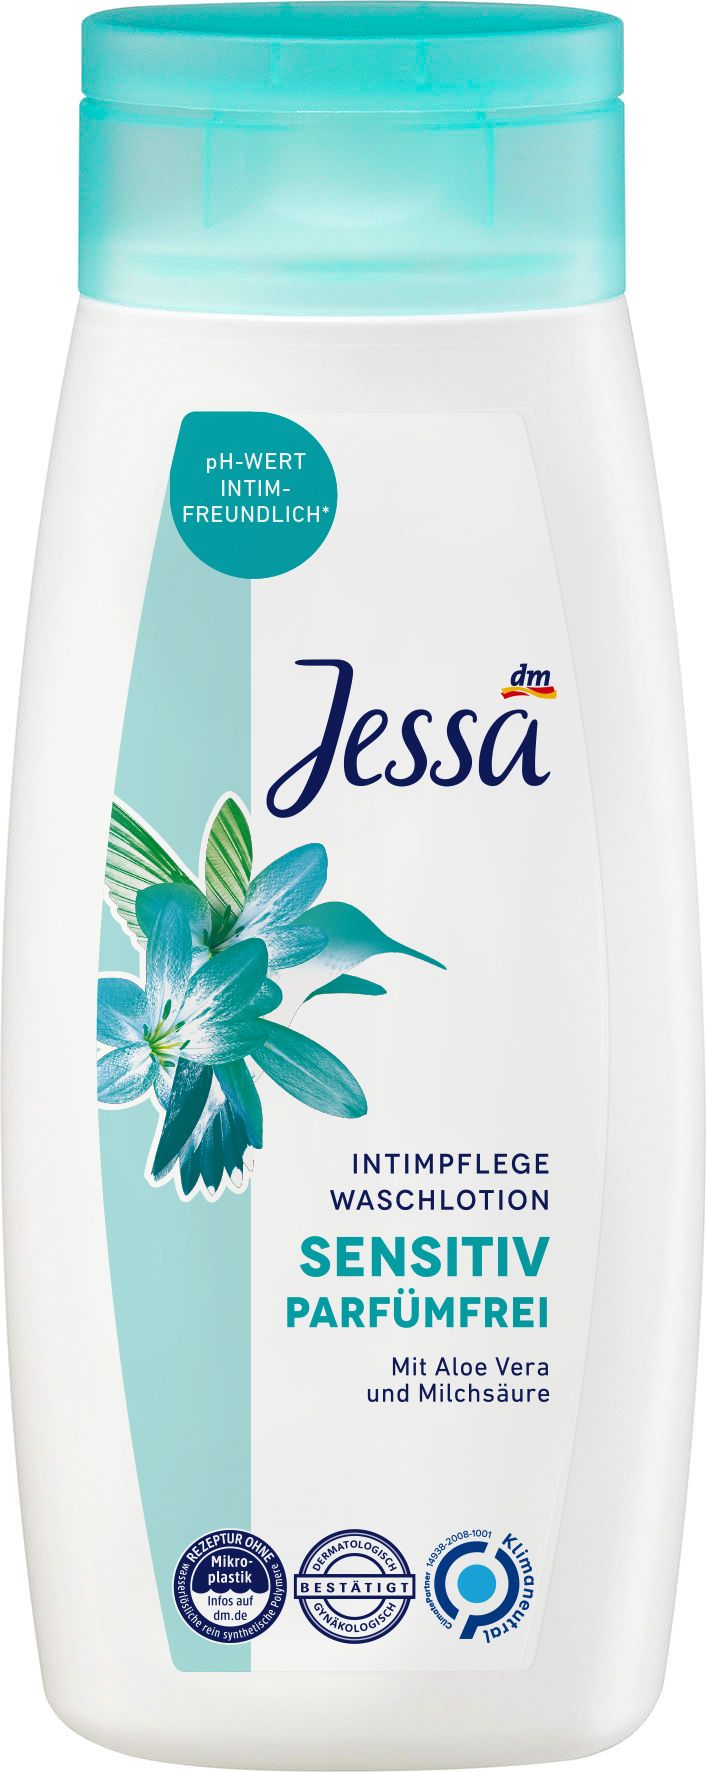 Jessa Intimpflege Waschlotion sensitiv